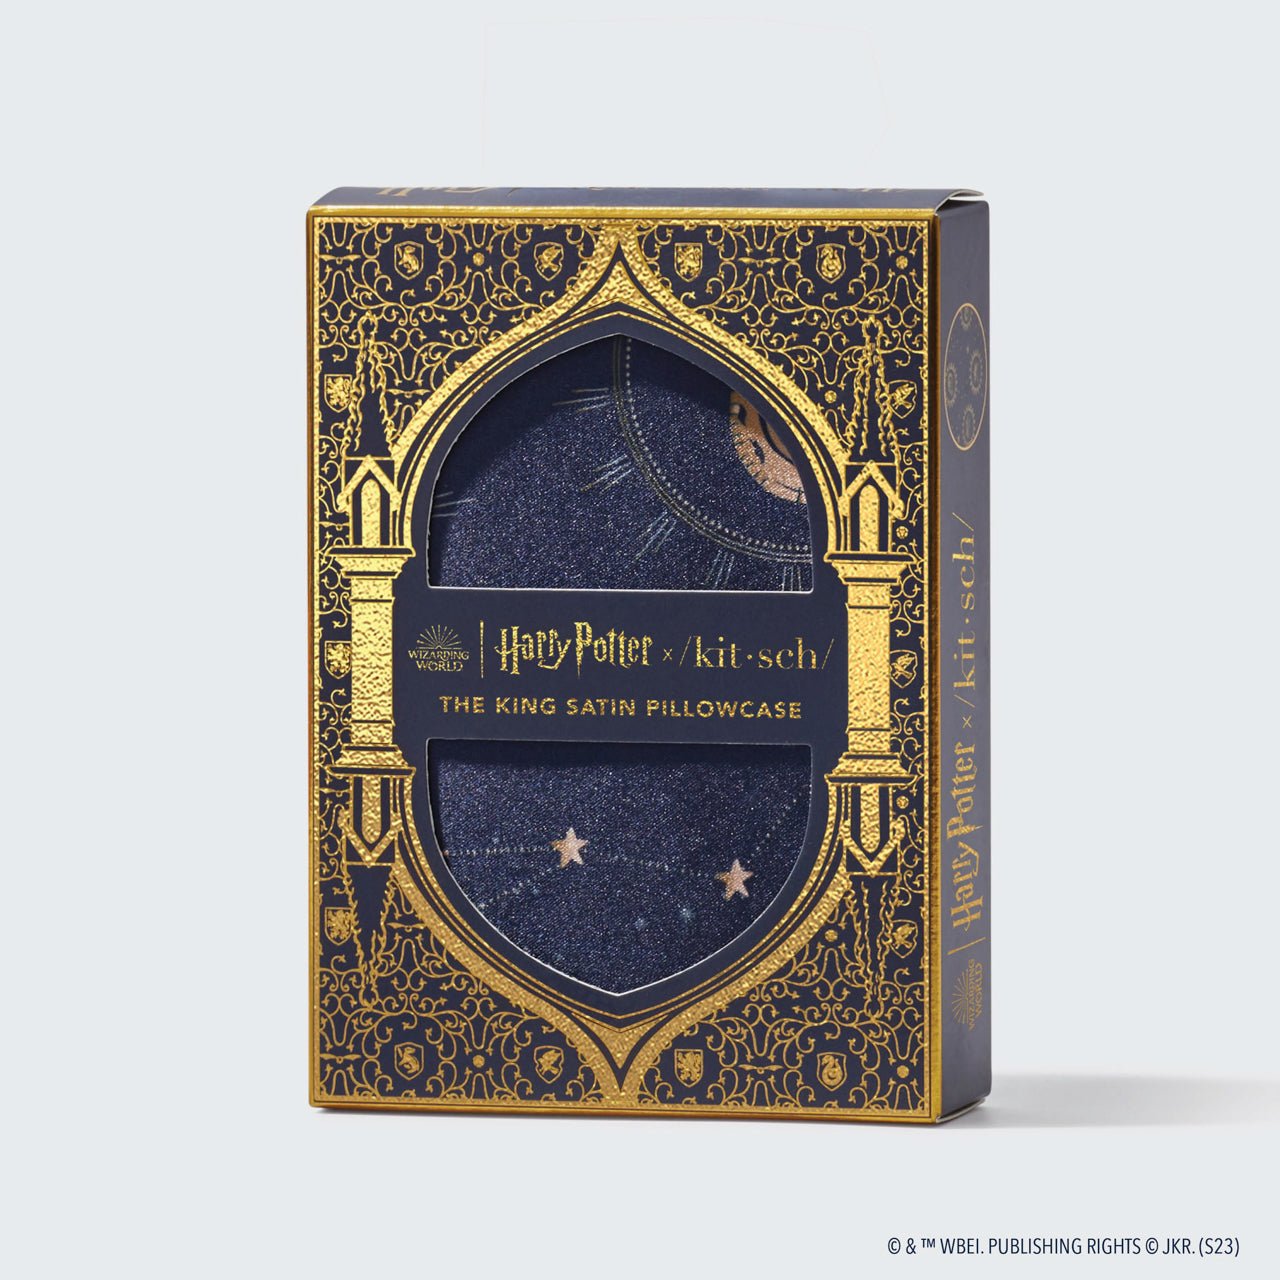 Harry Potter x Kitsch King Satin Pillowcase - Midnight at Hogwarts